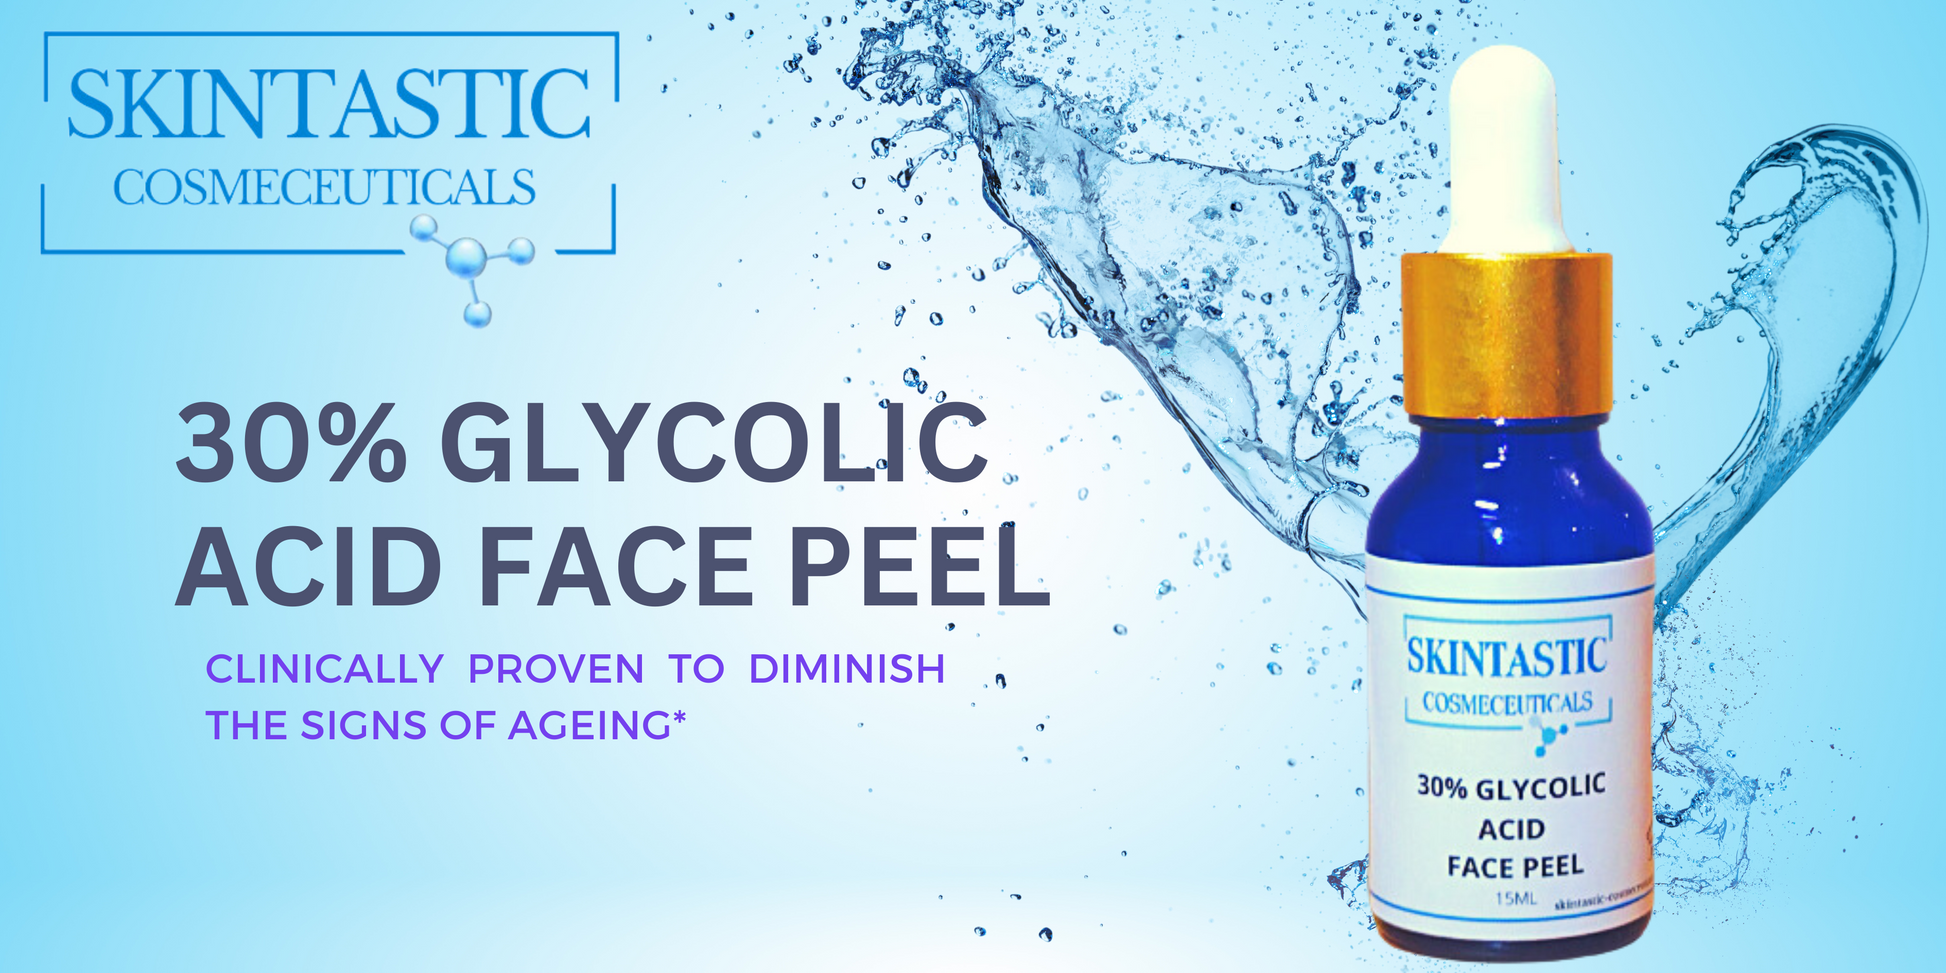 30% Glycolic Acid Face Peel                                                                                                                                                                                                               15ml SKINTASTIC